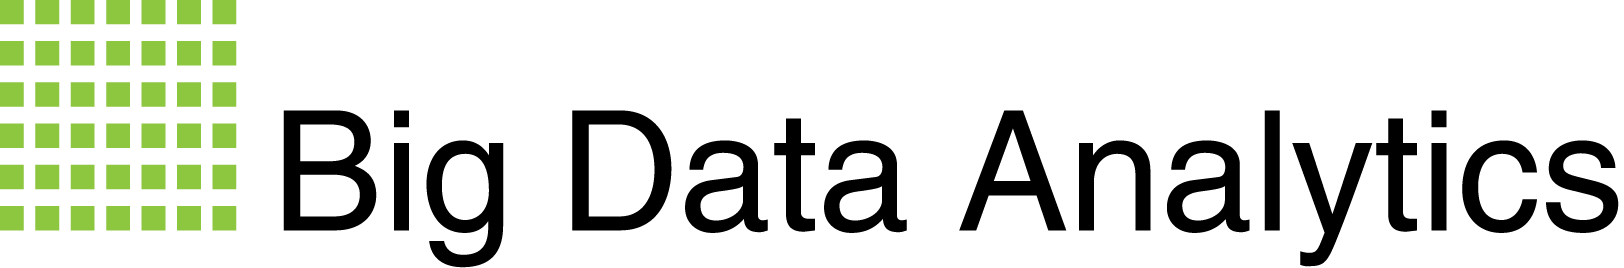 logo-big-data-analytics